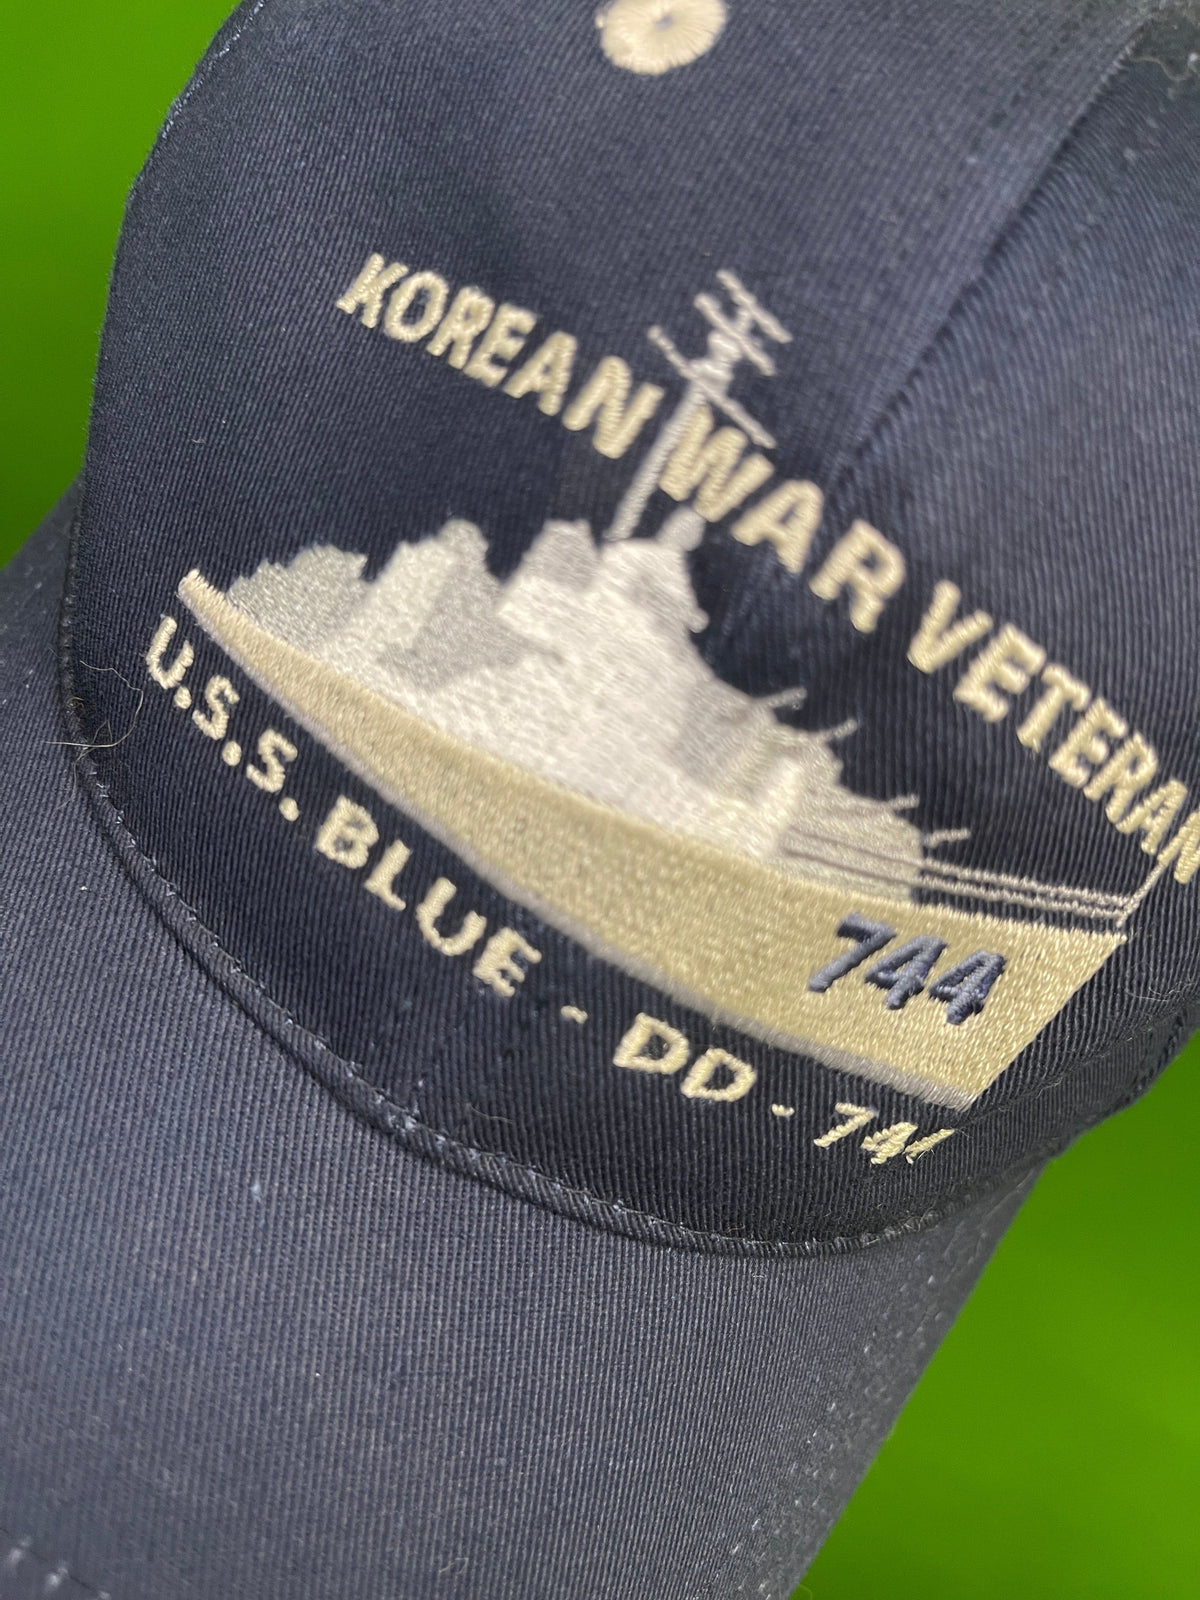 Korean War Veteran Hat/Cap USS Blue DD 744 Destroyer Squadron 13